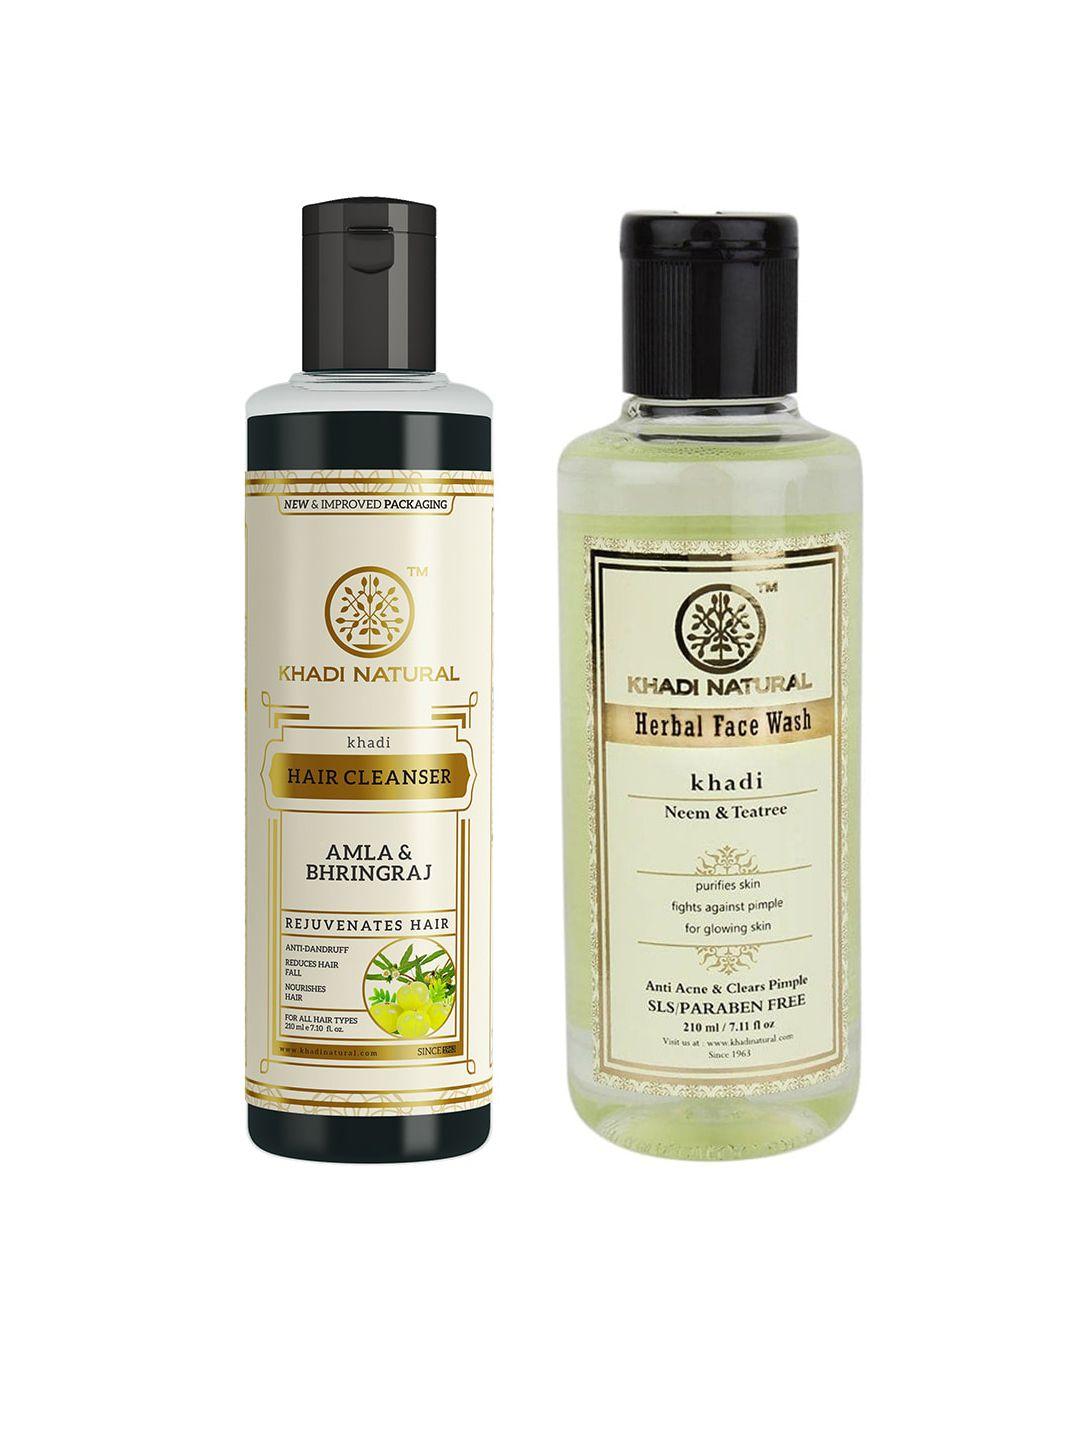 khadi natural amla & bhringraj hair cleanser & face wash